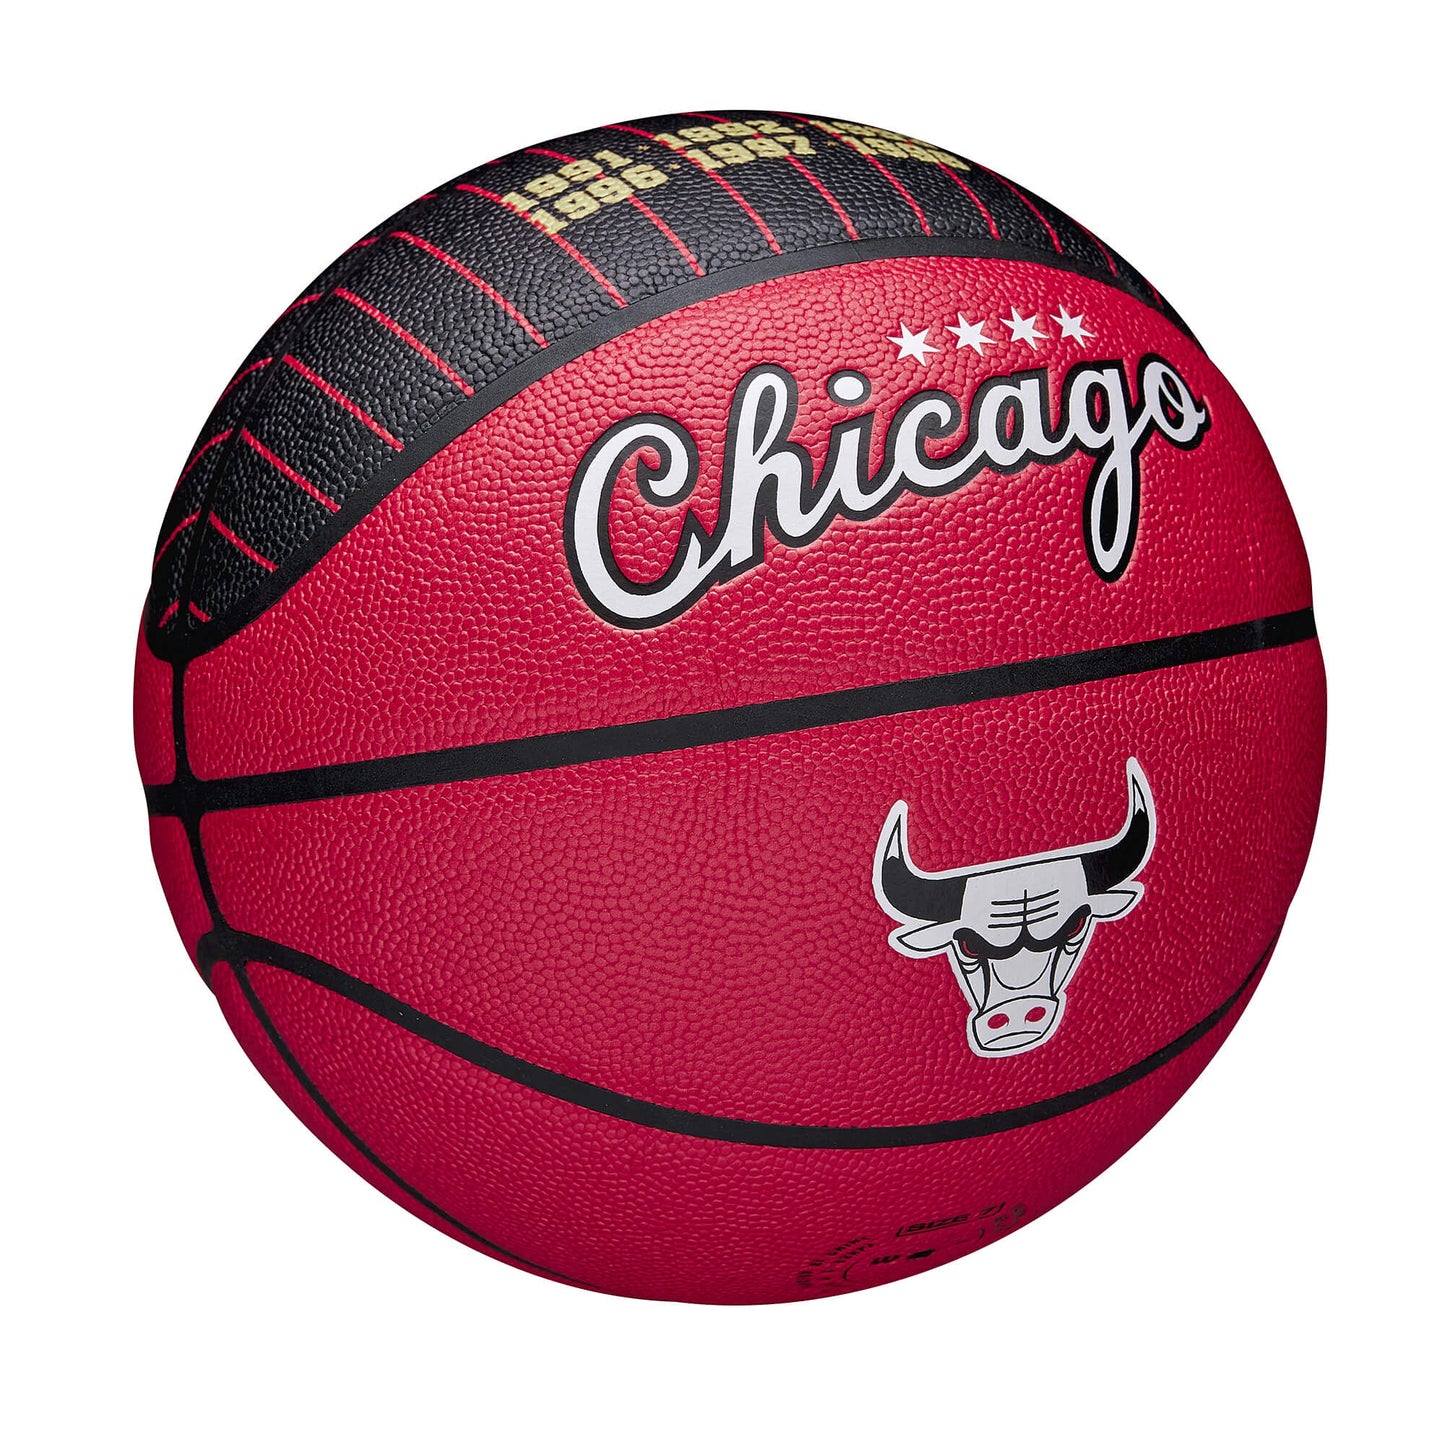 Wilson NBA Team City Collector Basketball Chicago Bulls - Red (sz. 7)